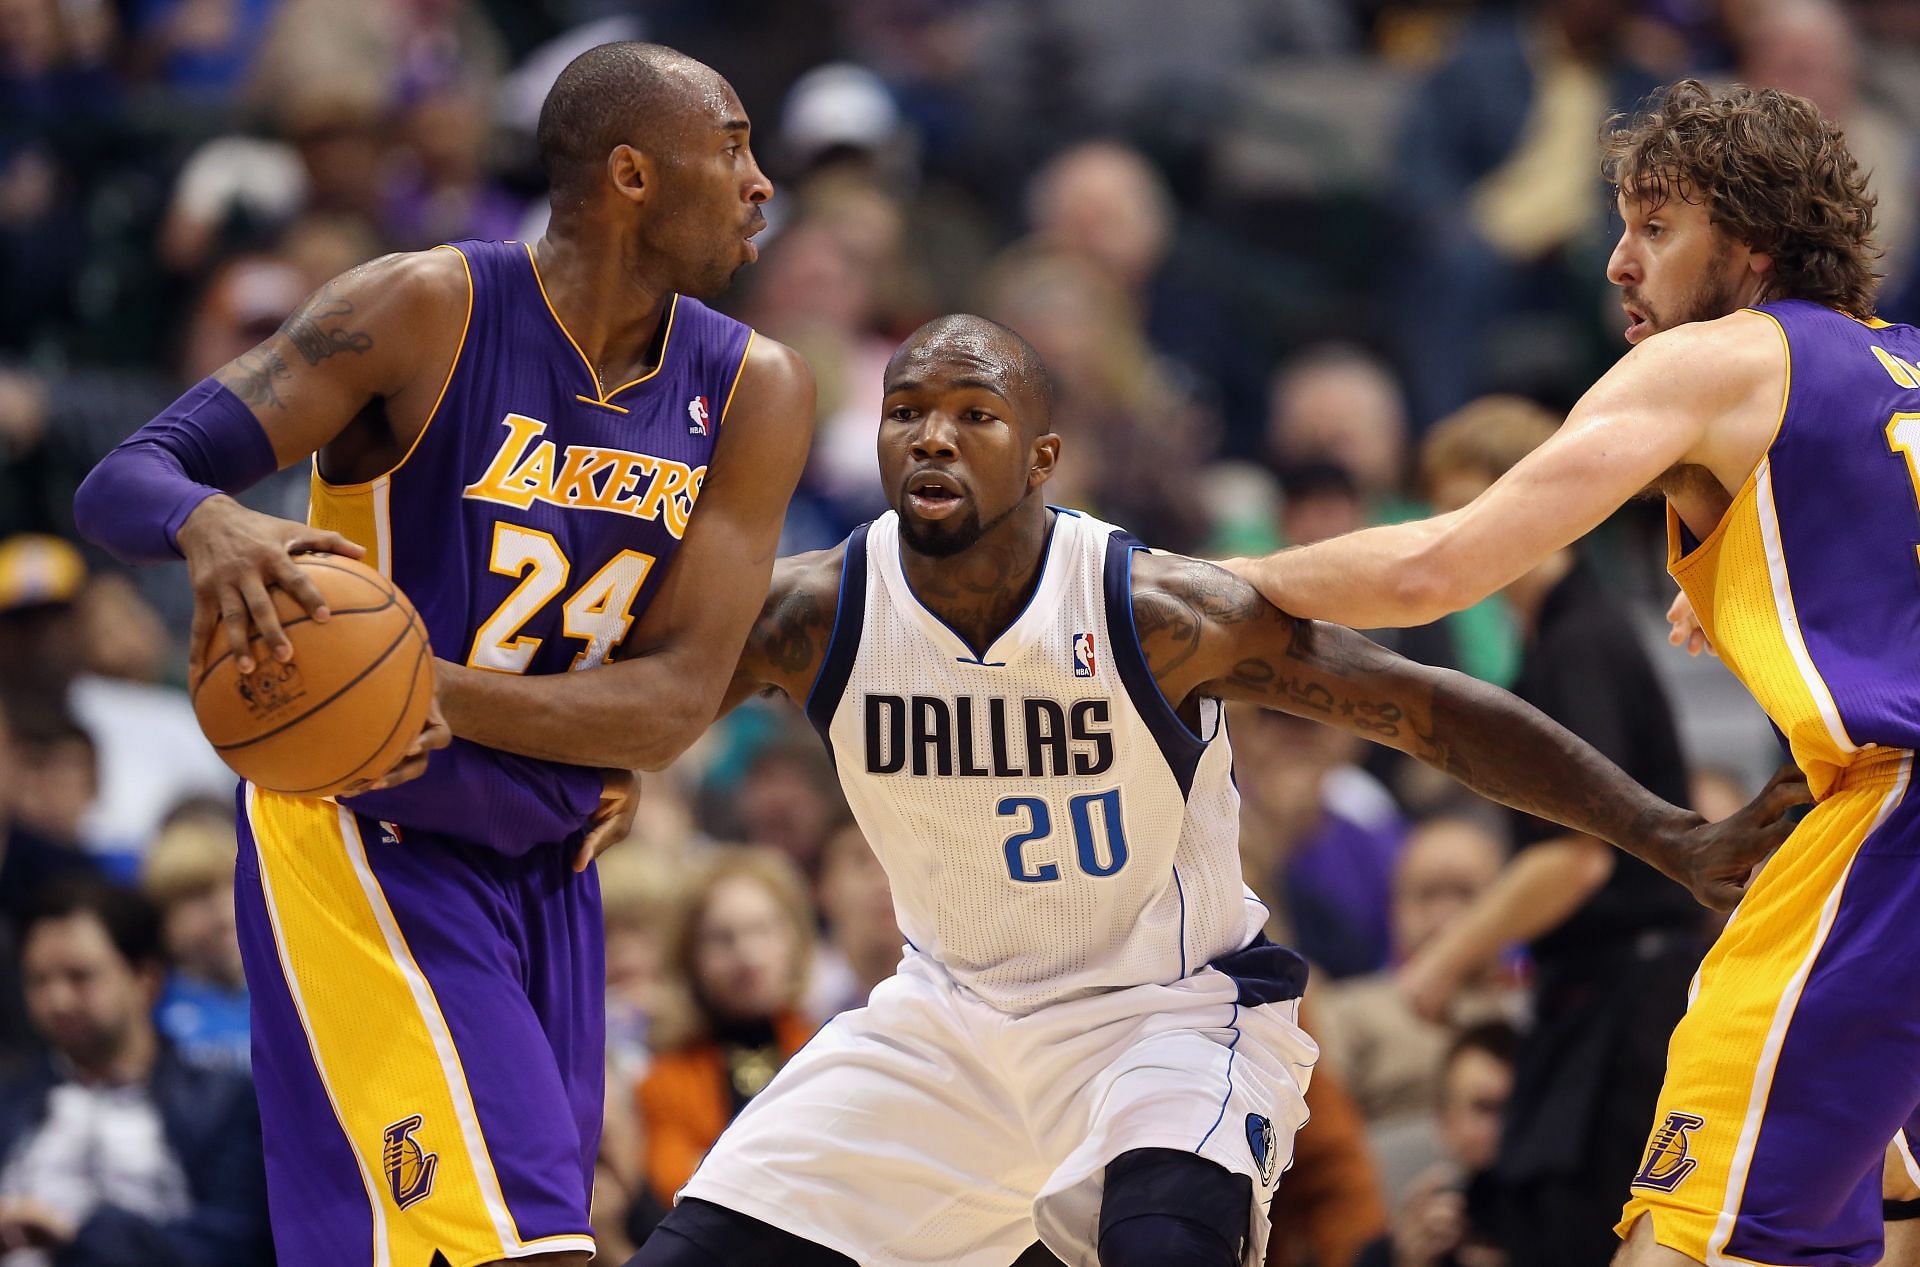 Kobe Bryant of the LA Lakers dribbles the ball against Dominique Jones of the Dallas Mavericks.